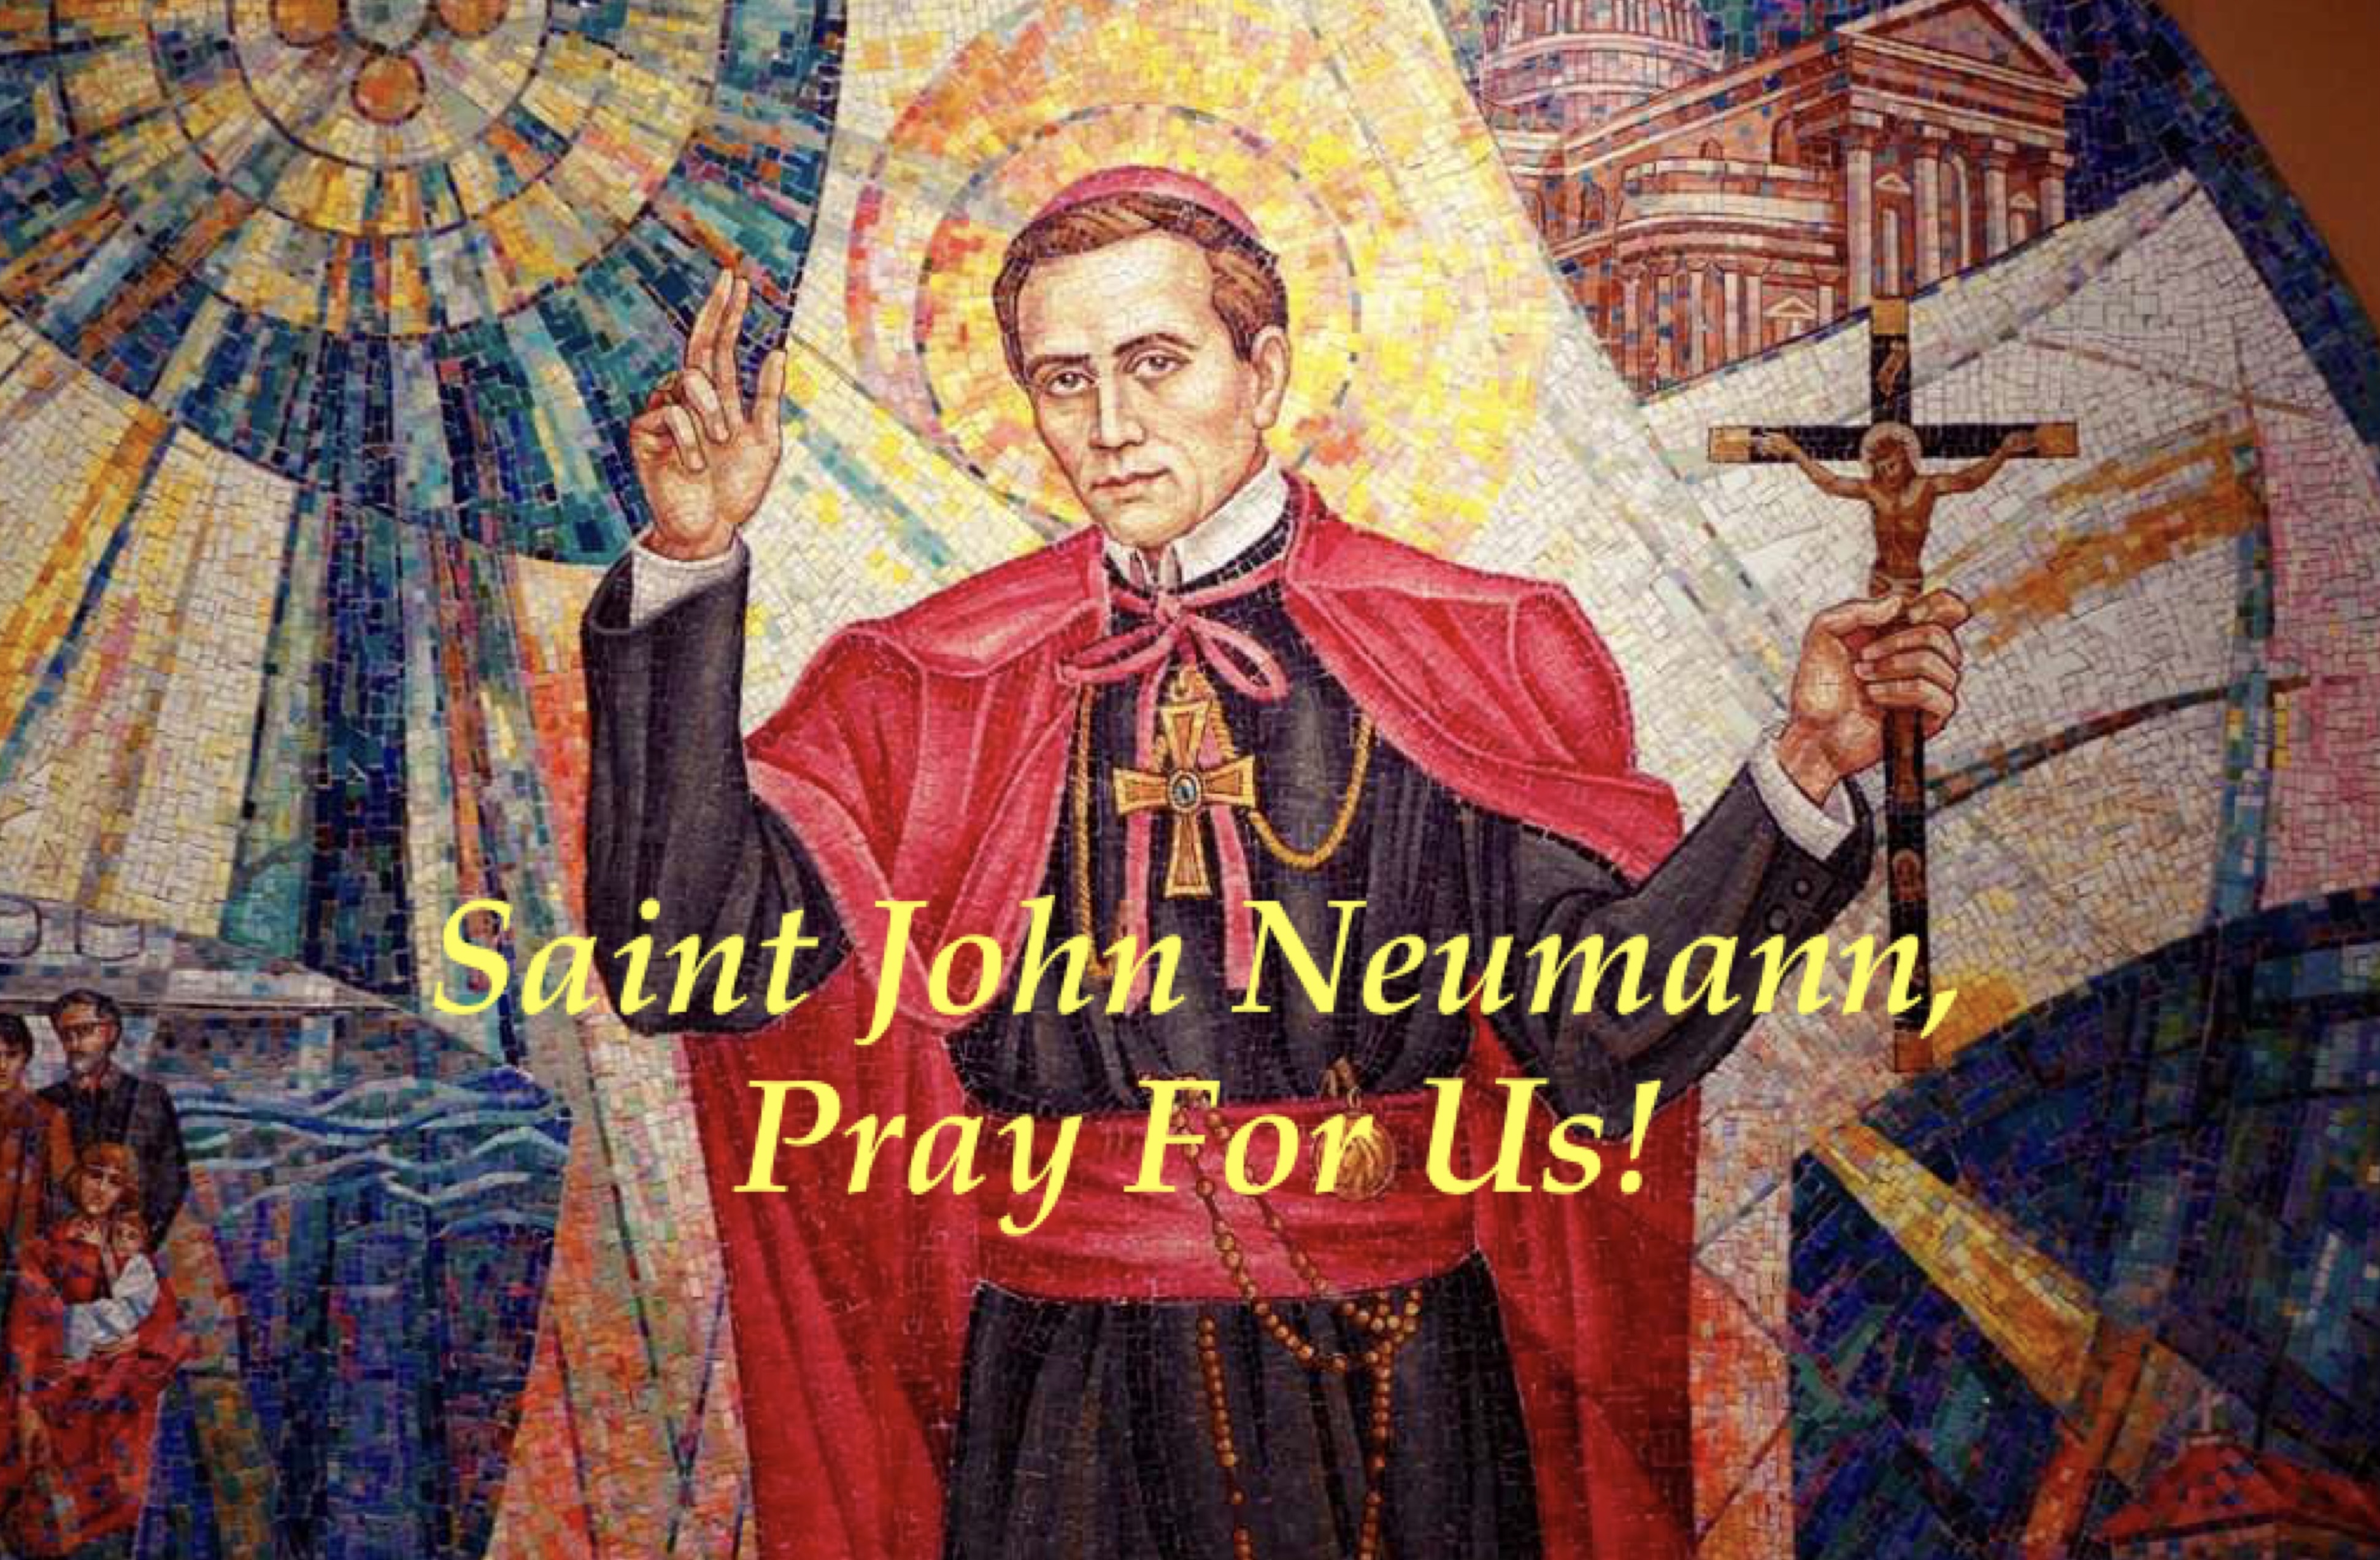 5th January – Saint John Neumann